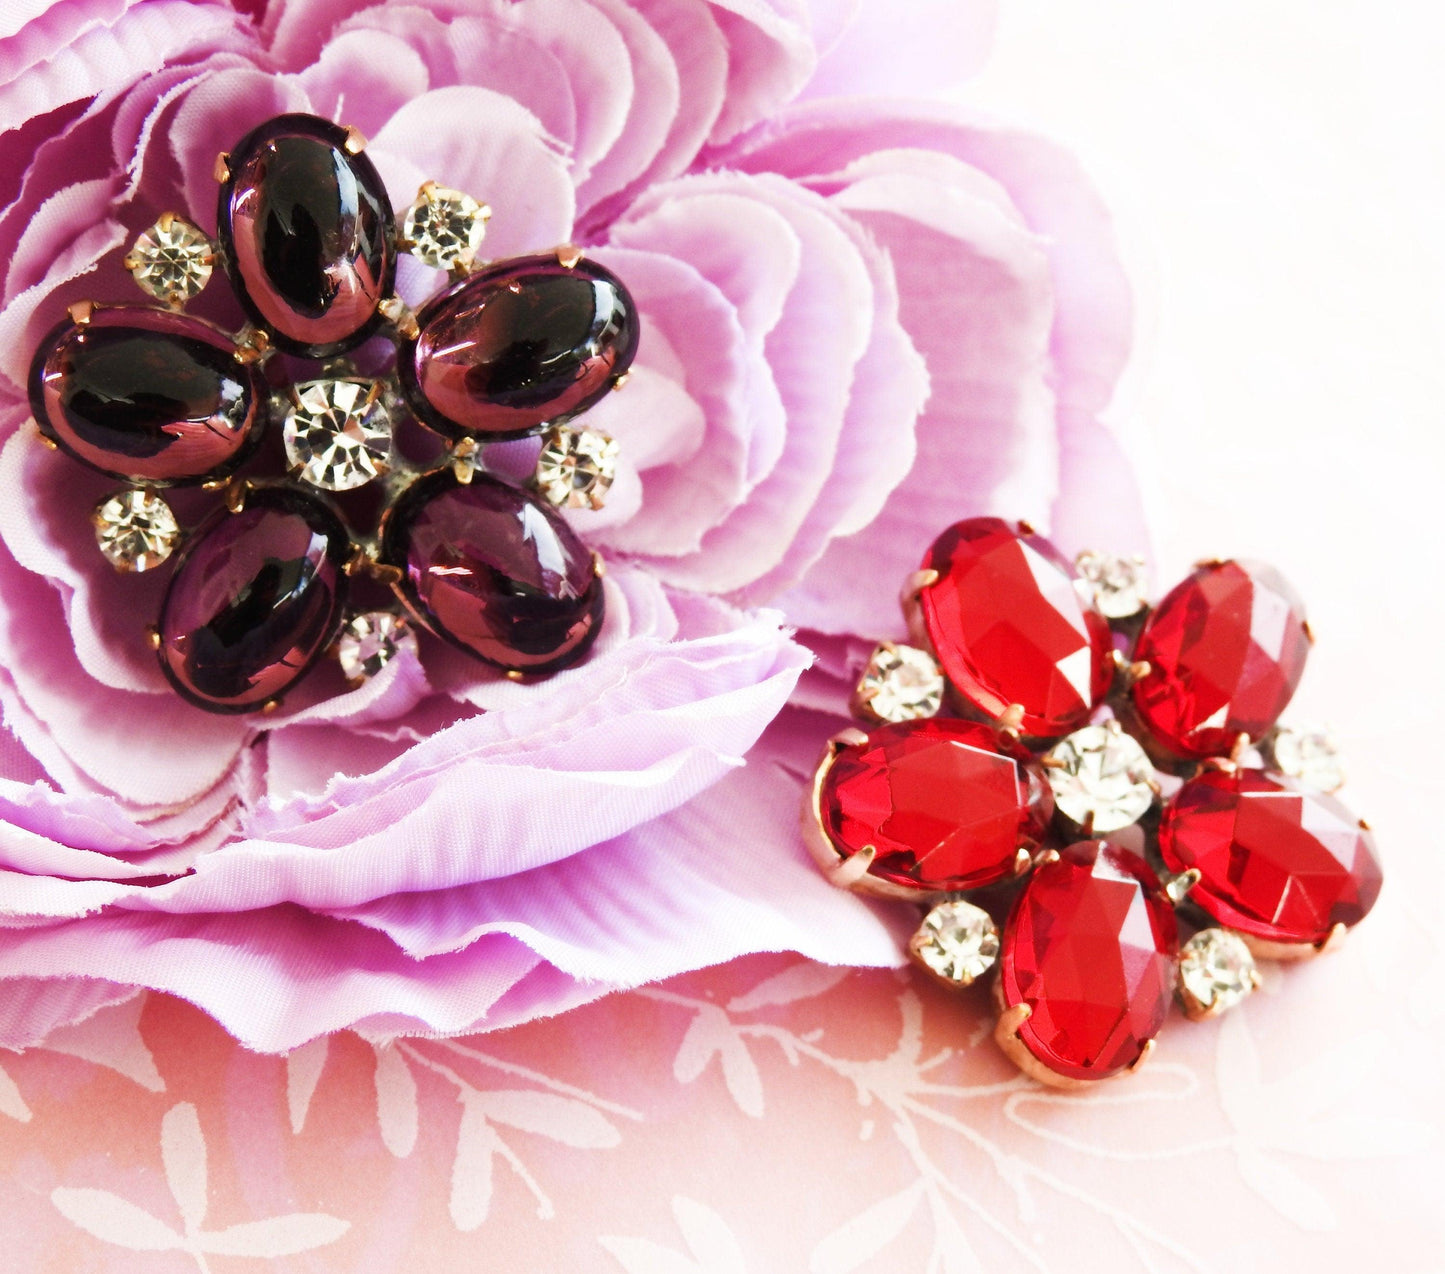 floral buttons for bracelet closures